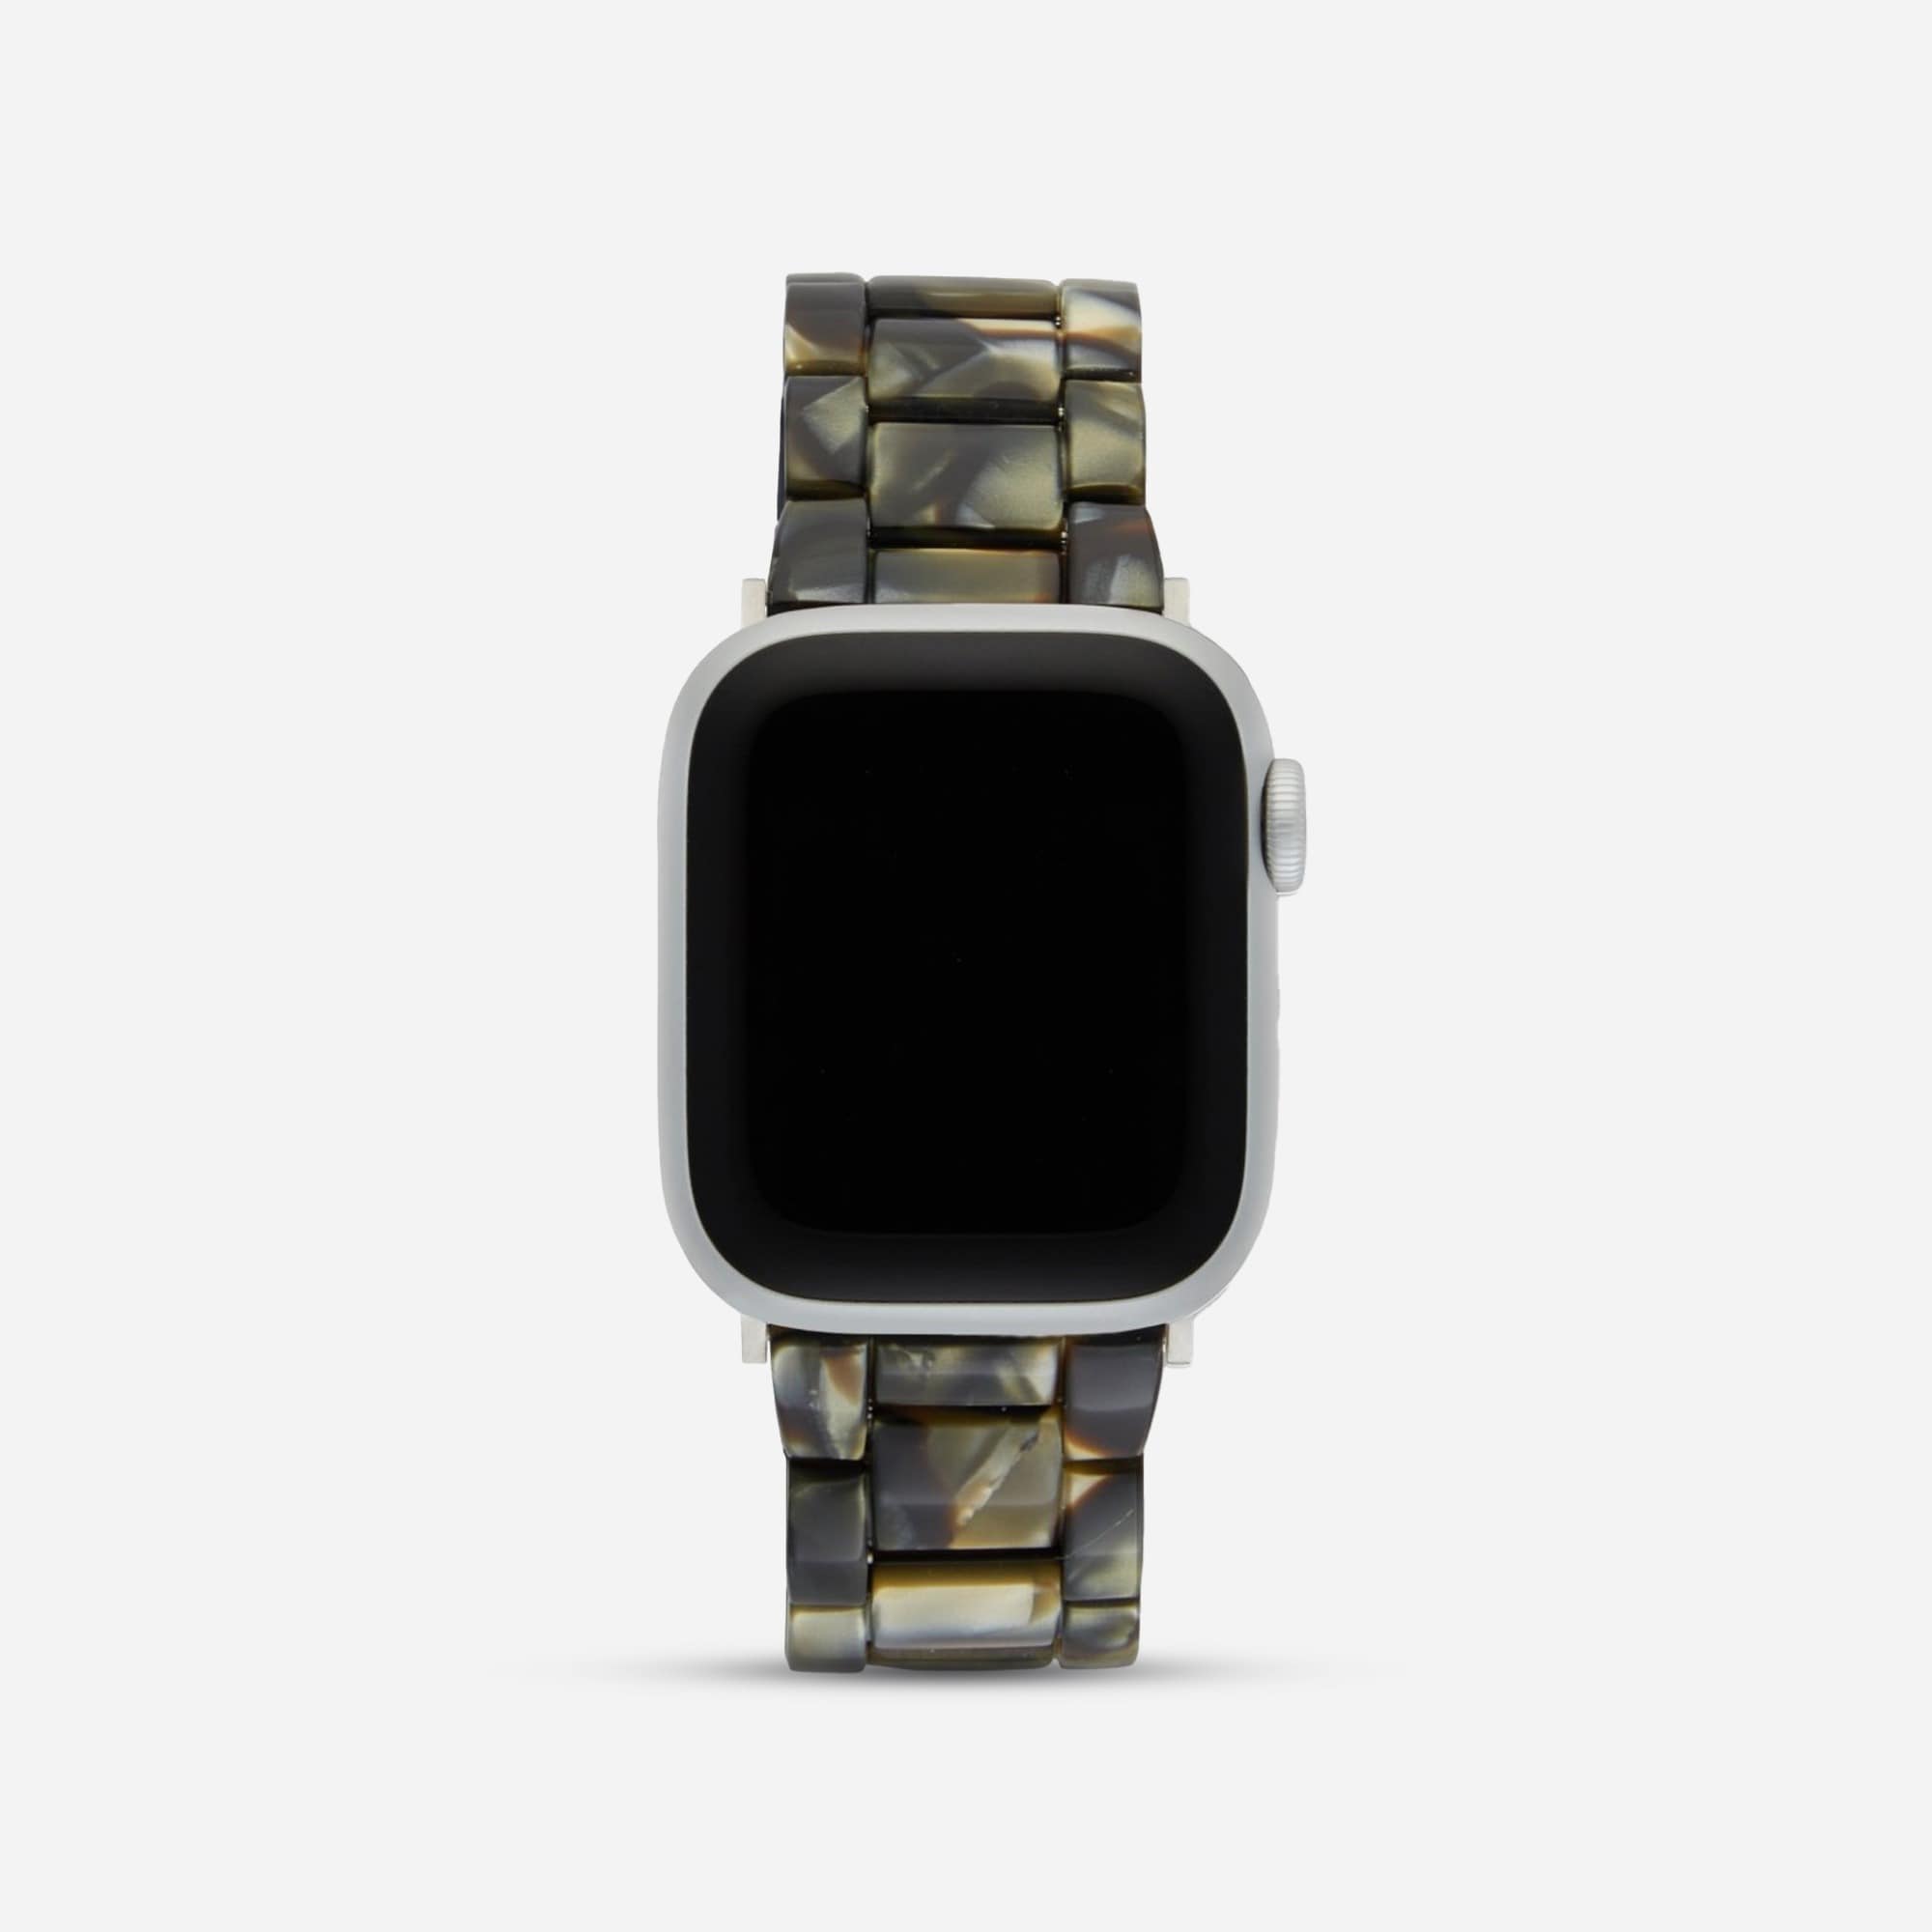  MACHETE Apple Watch band in universal fit